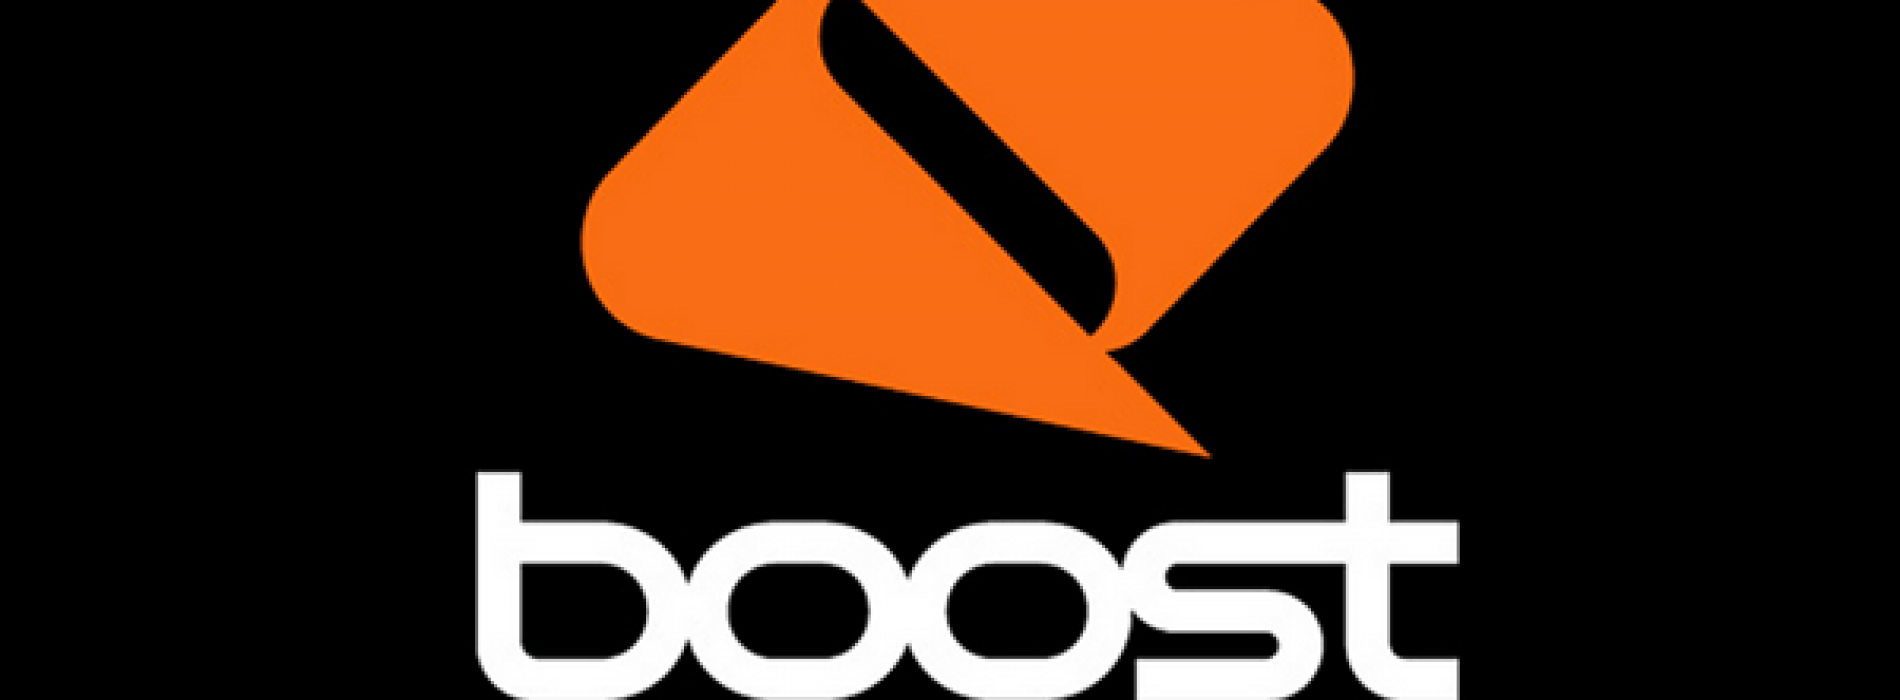 Boost Mobile Logo - Boost mobile Logos